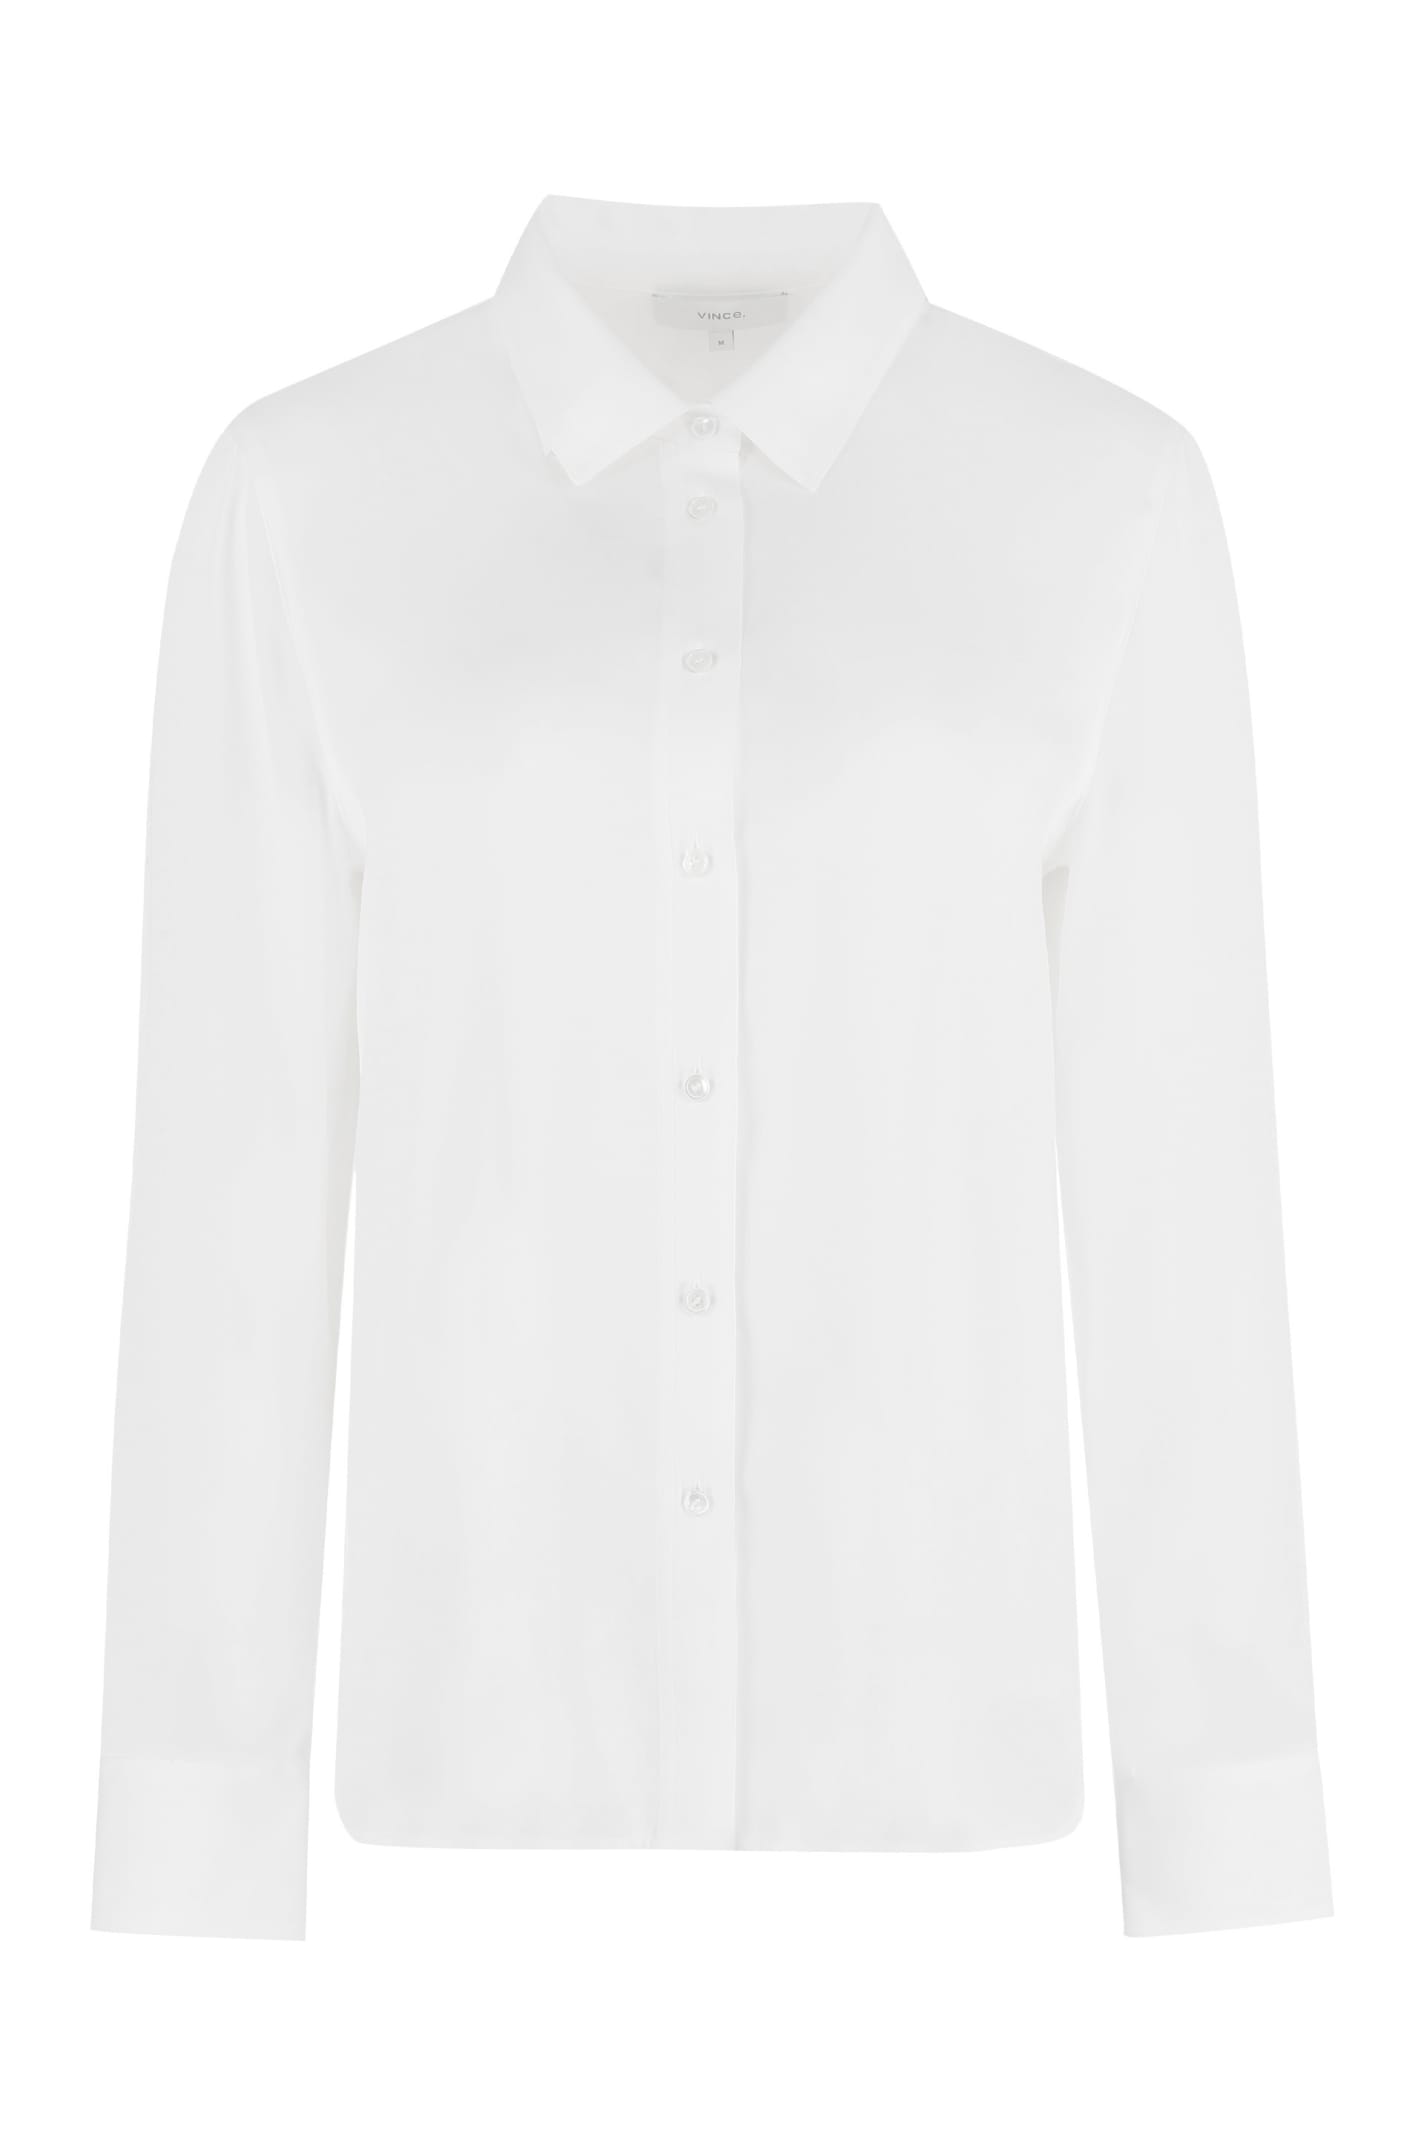 Vince Silk Shirt In White